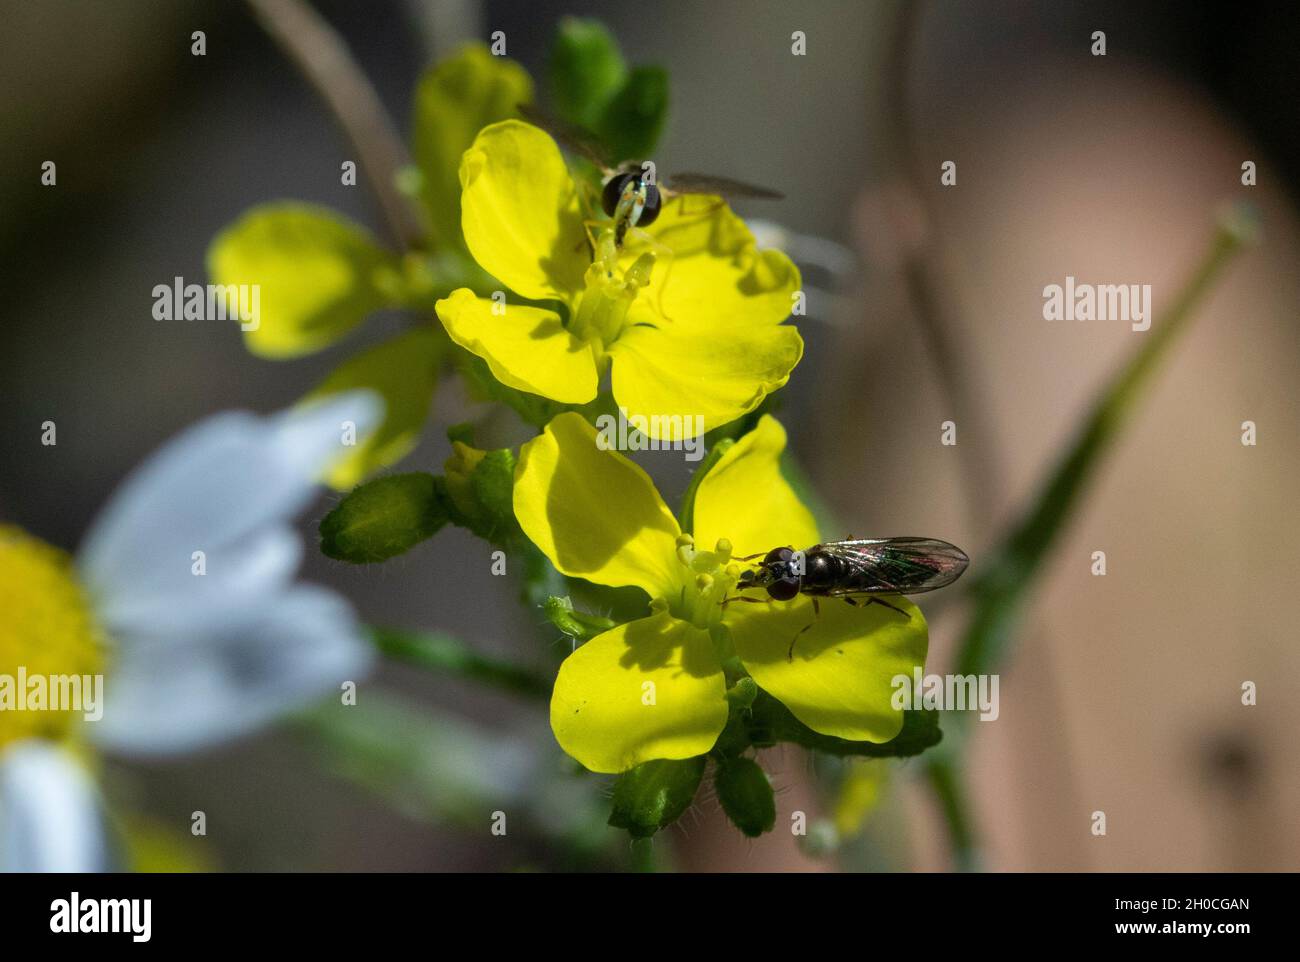 Hoverflies on yellow flower Stock Photo